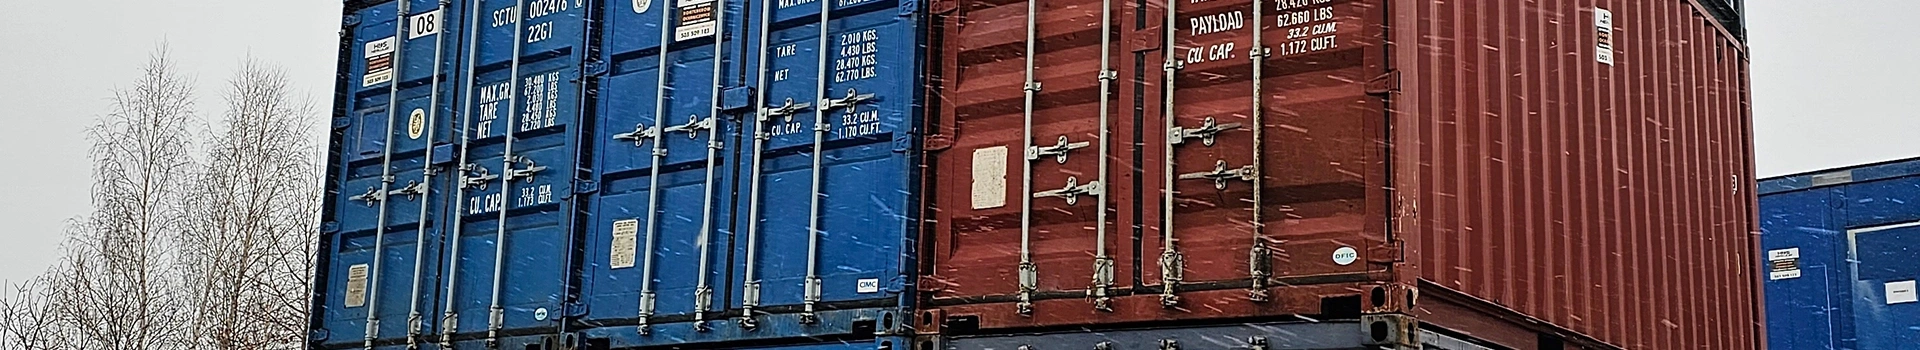 Kolorowe kontenery